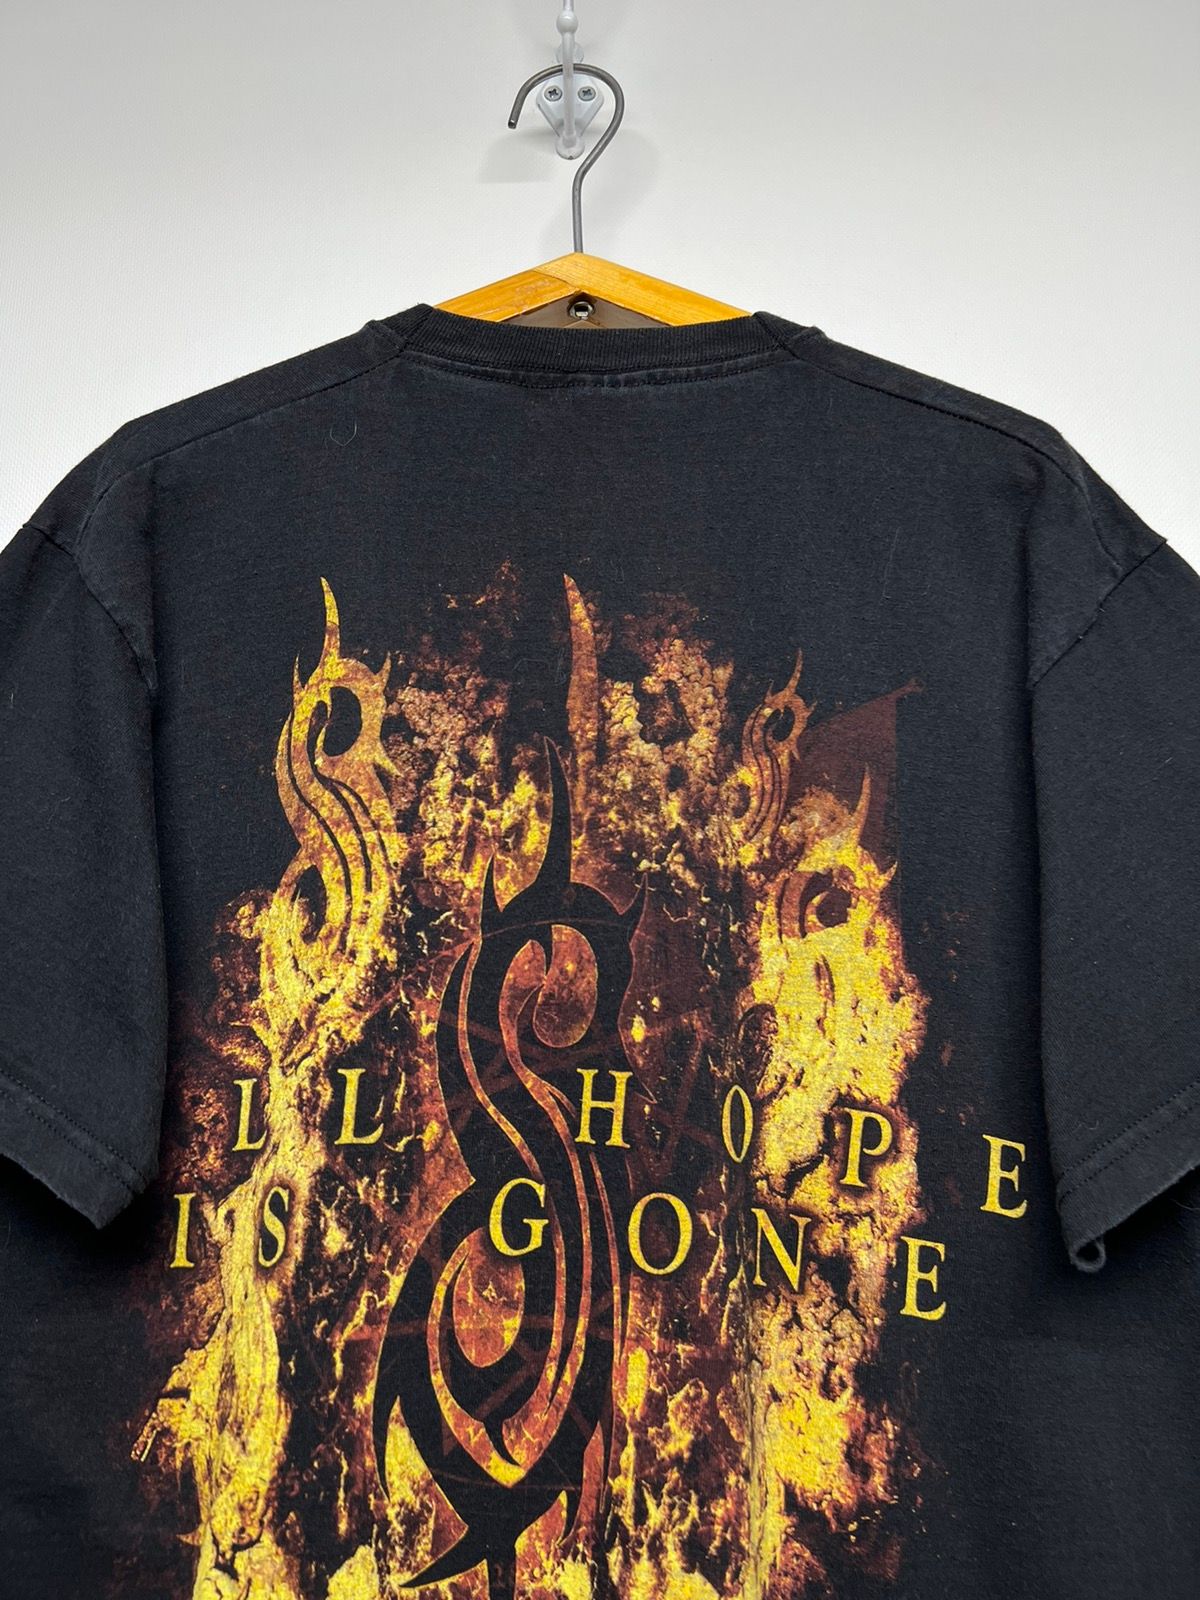 Vintage Vintage 2009 Slipknot All Hope Is Gone Tour T-Shirt Size US M / EU 48-50 / 2 - 6 Thumbnail